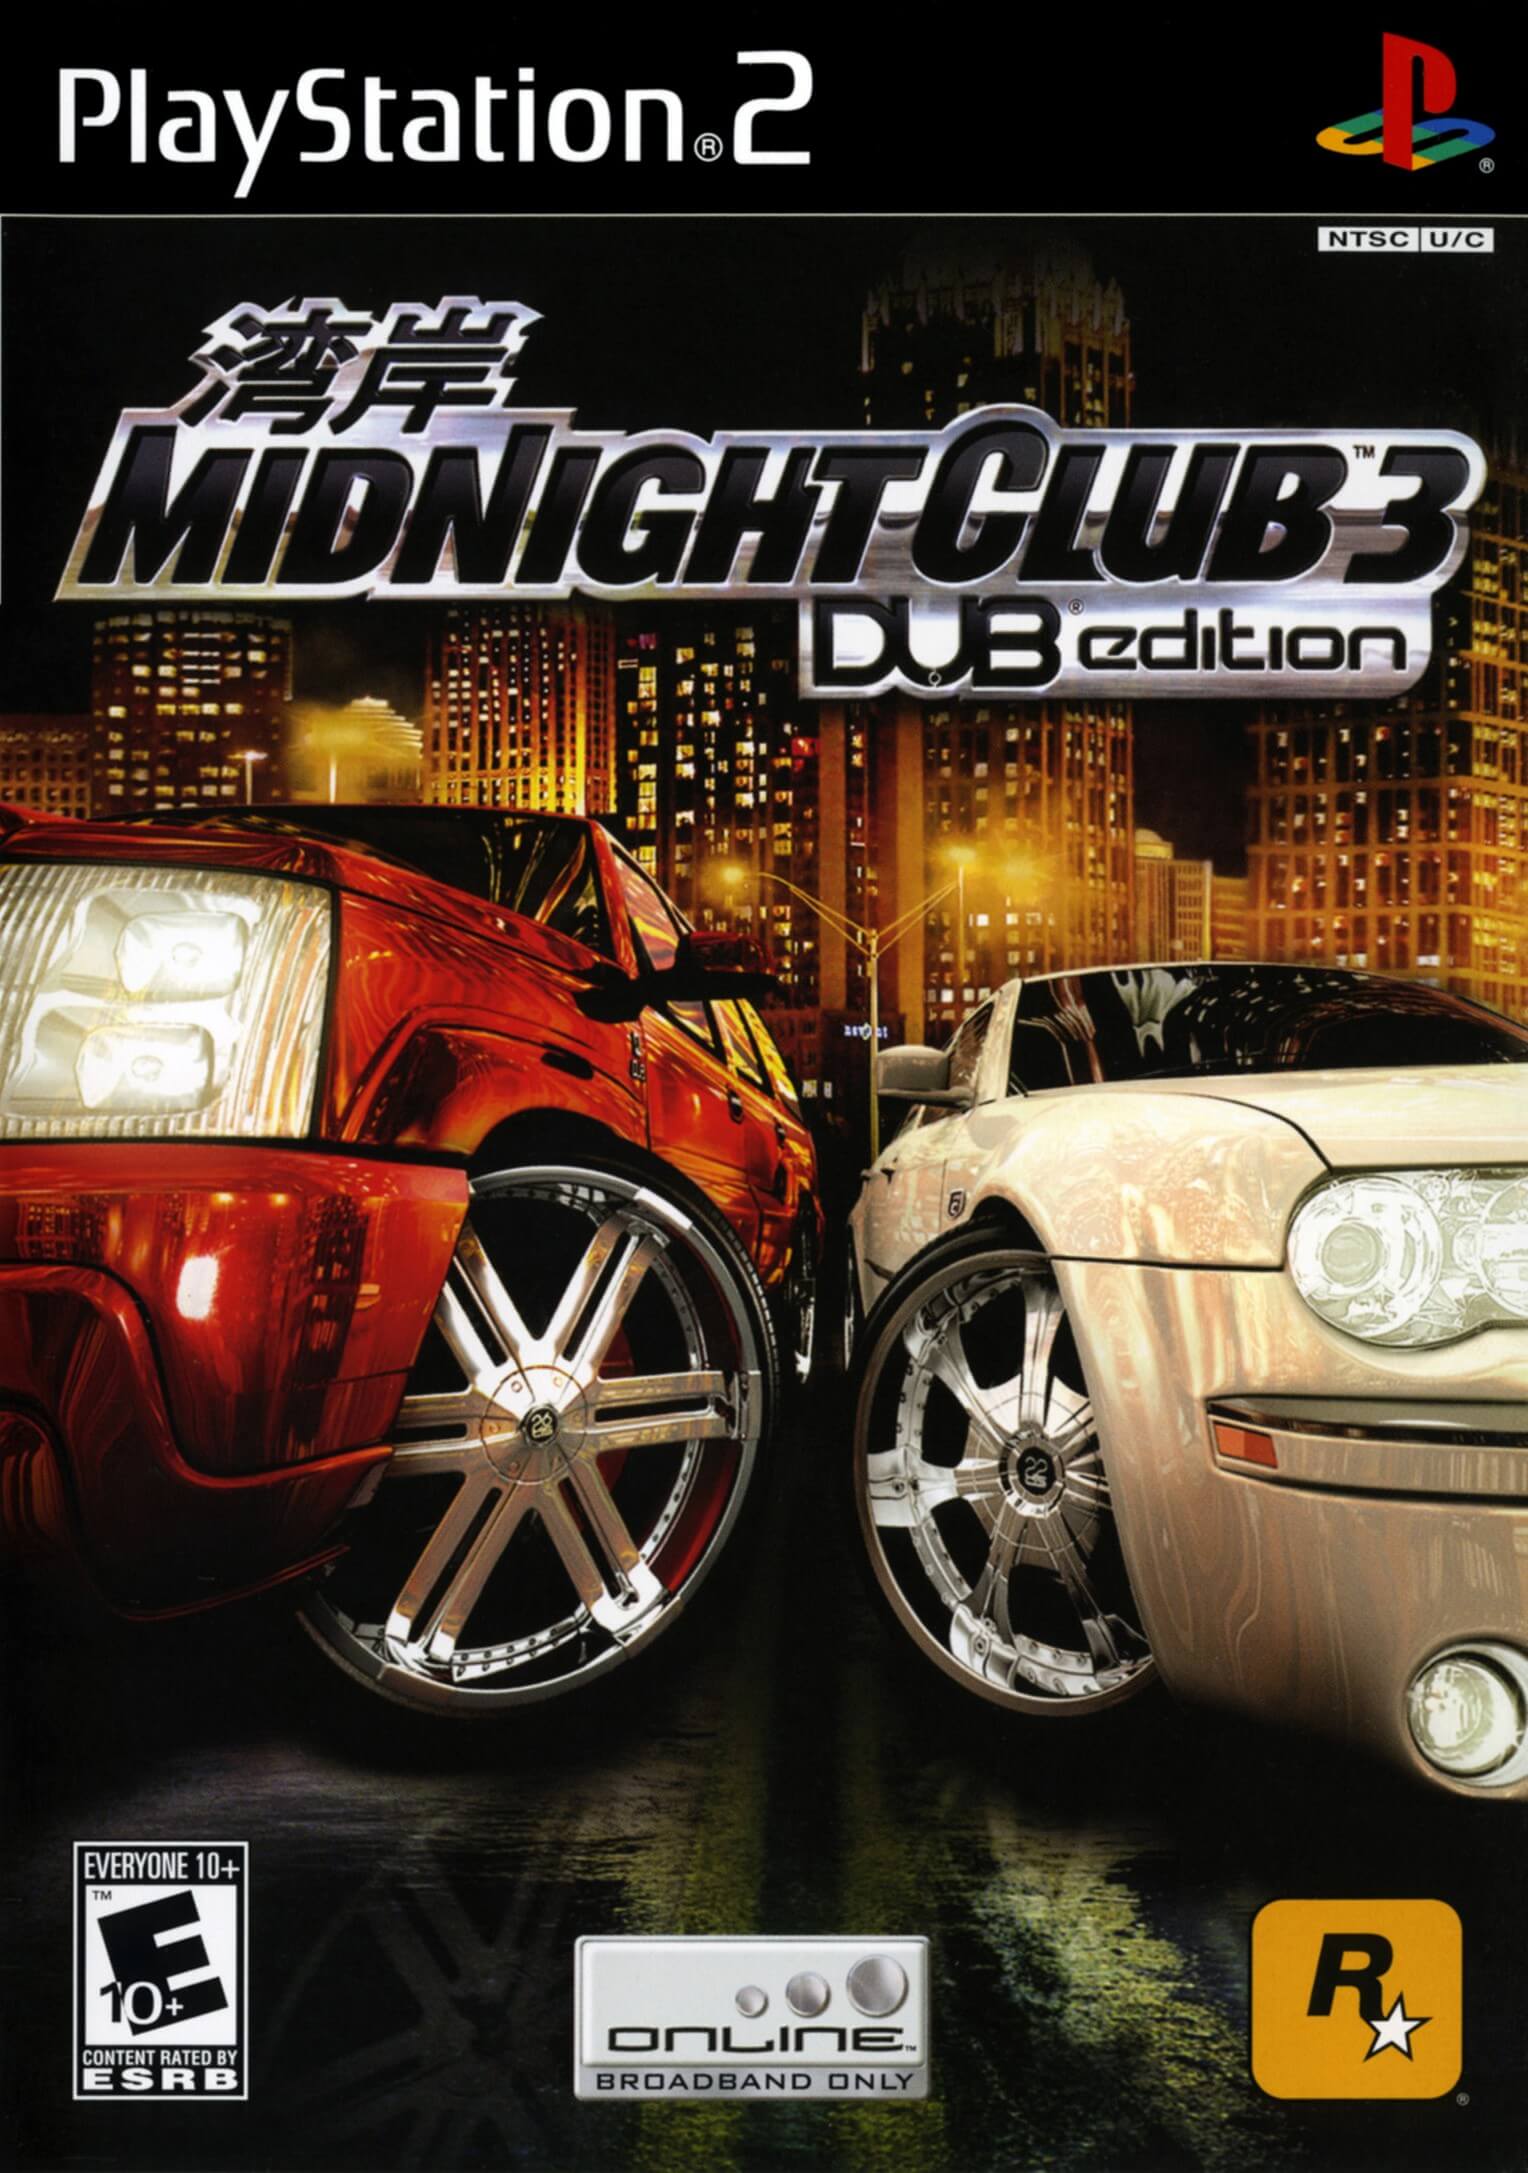 Midnight ps3. Midnight Club Dub Edition ps2. Midnight Club 3 Dub Edition. Midnight Club 3 ps2. Midnight Club 3 Dub Edition ps2.